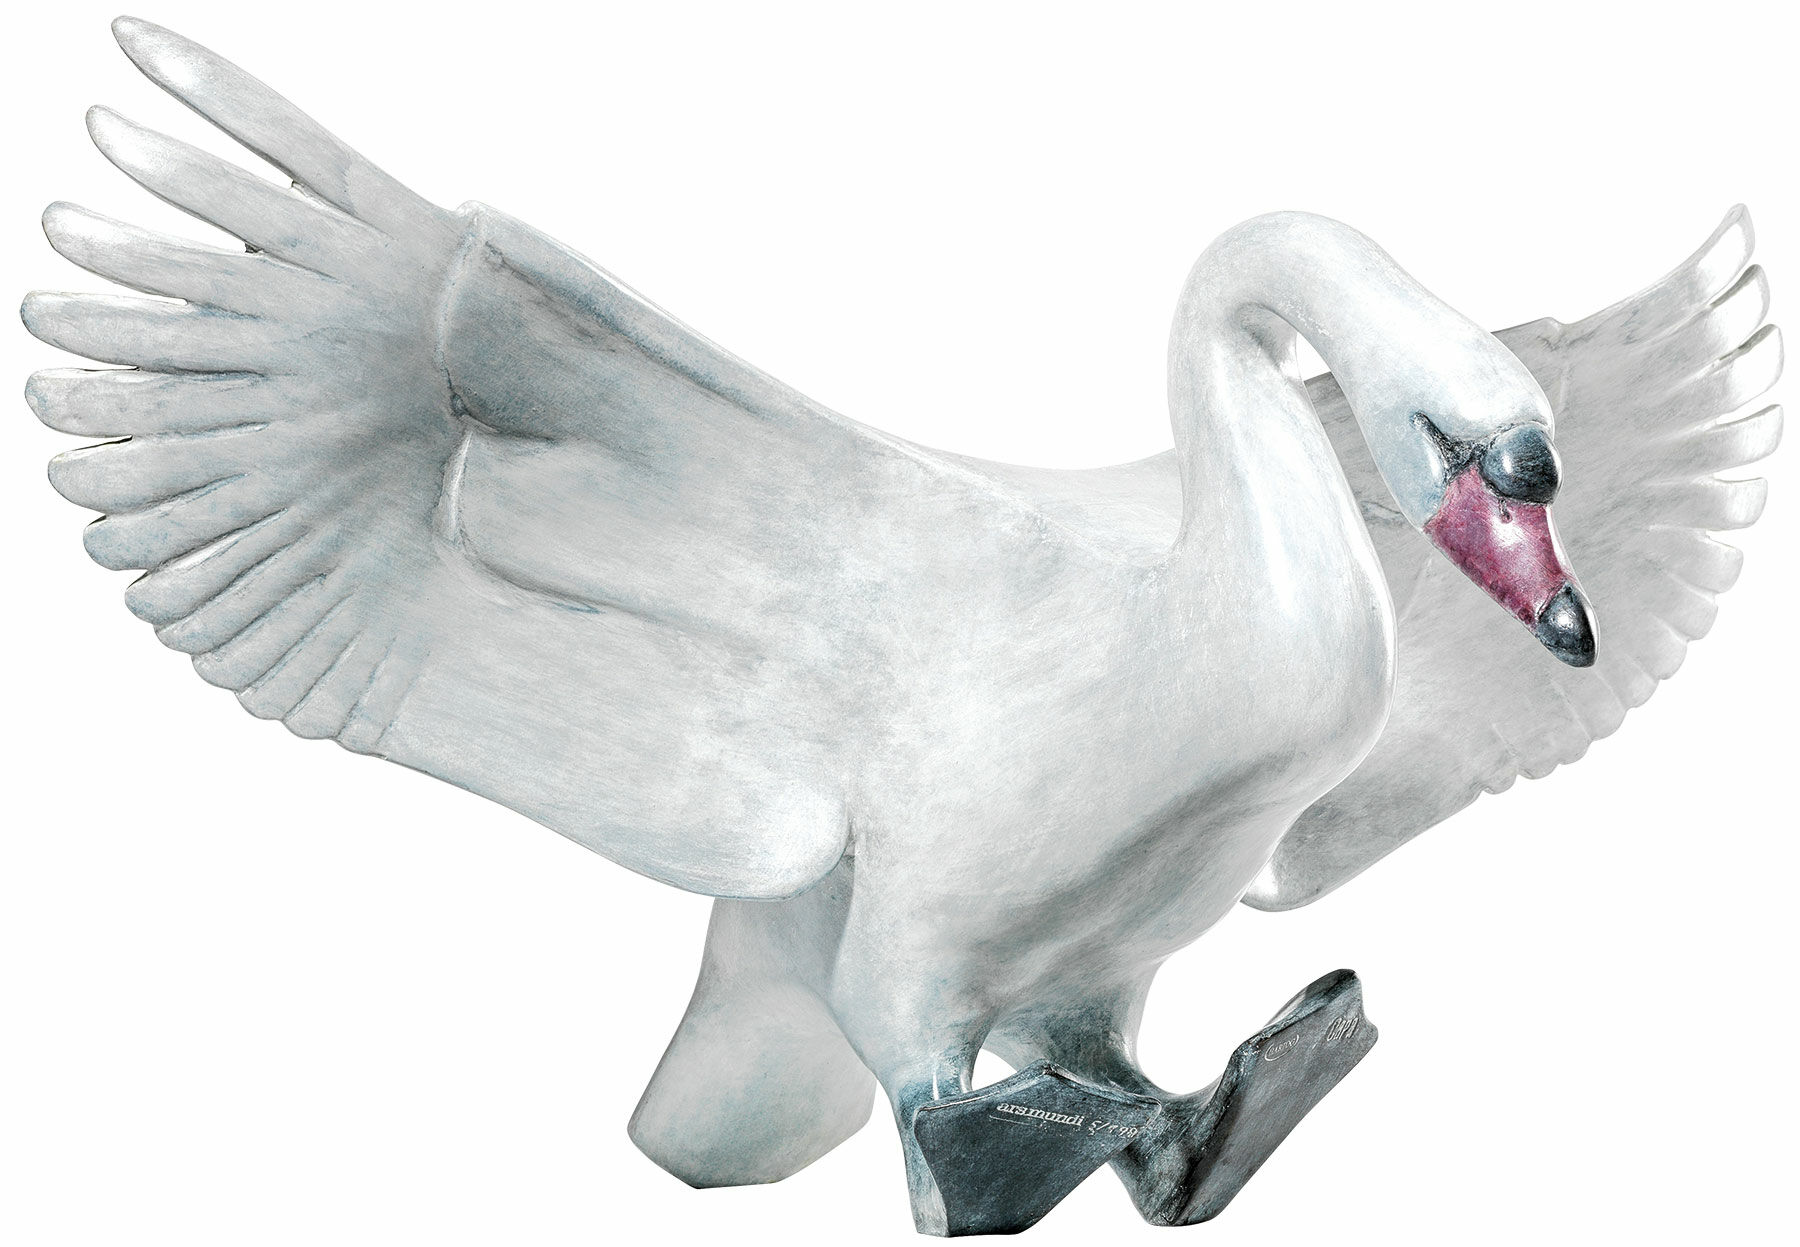 Sculpture "Landing Swan" (version without pedestal), bronze white/light grey by Evert den Hartog